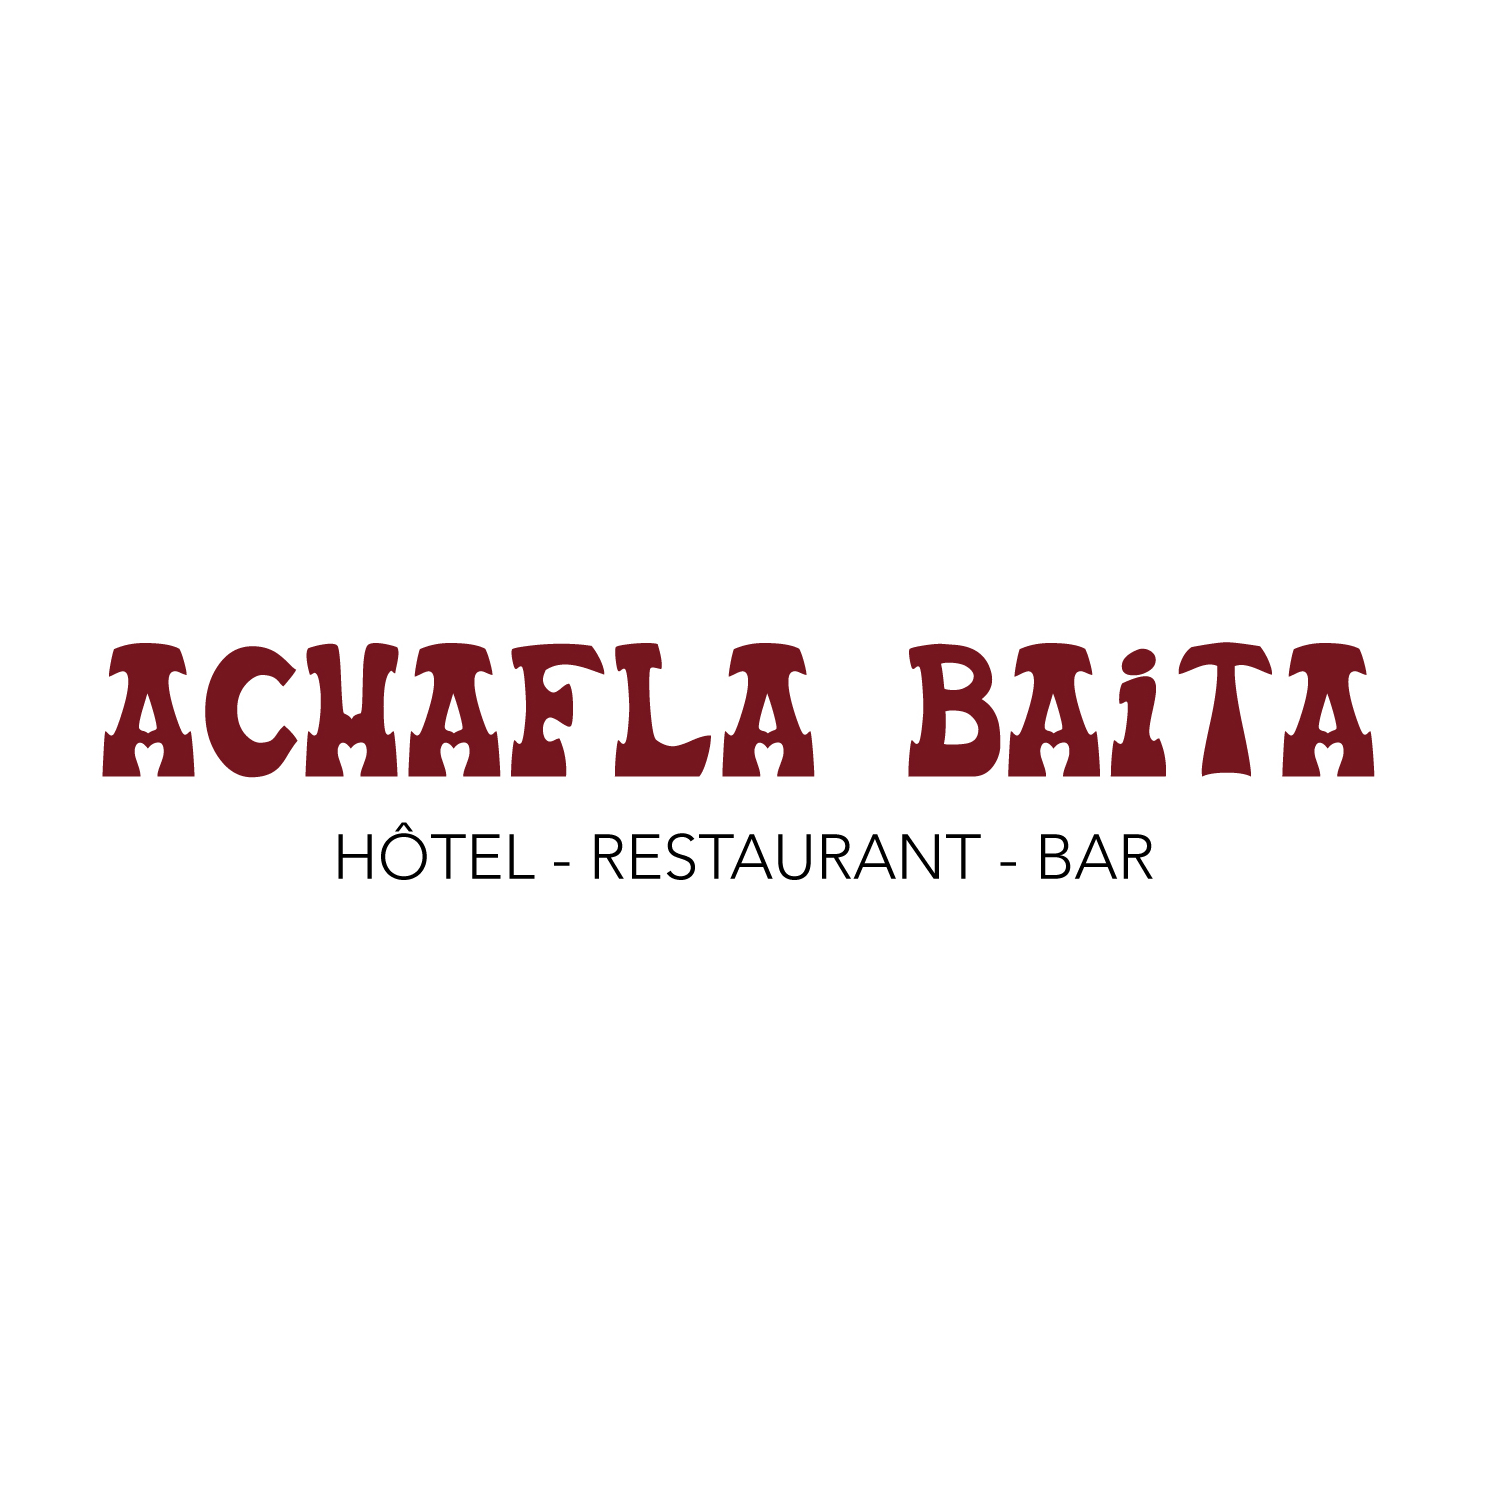 Logotype - Achafla Baita